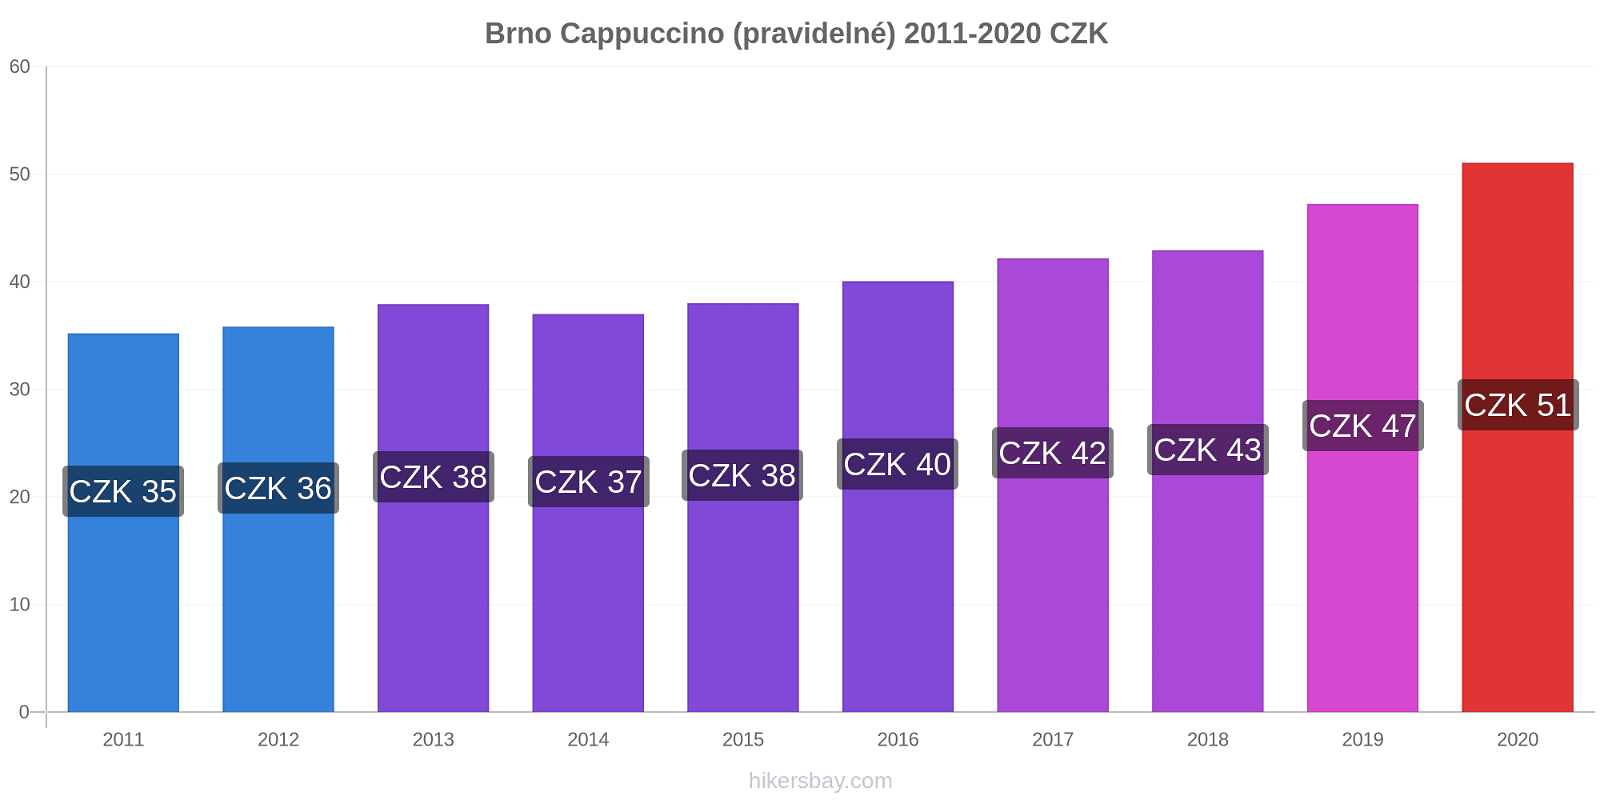 Brno změny cen Cappuccino (pravidelné) hikersbay.com